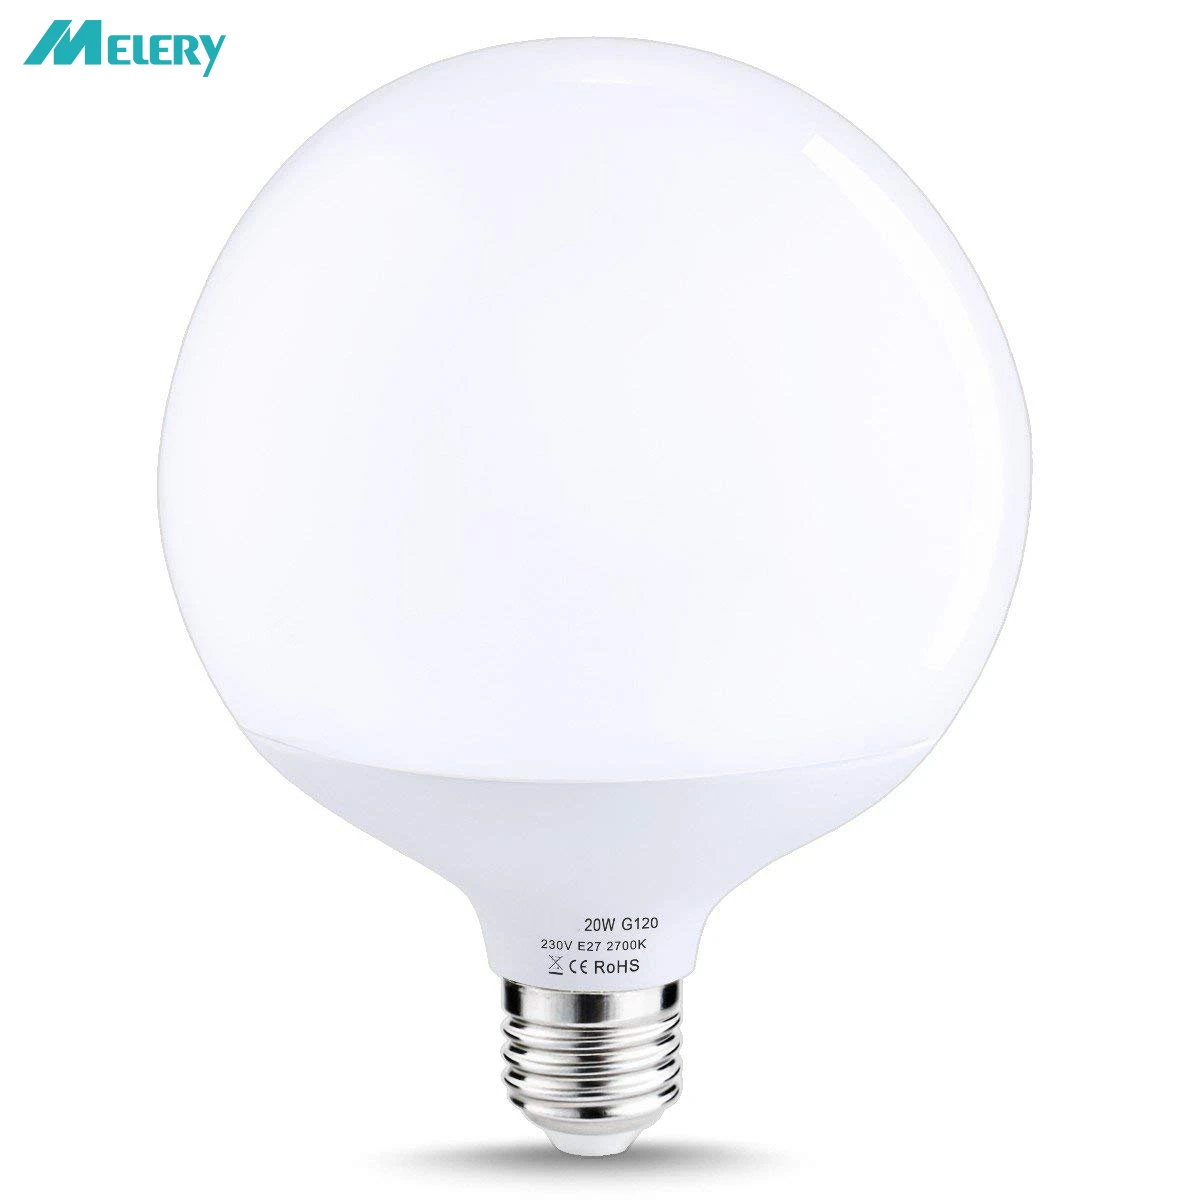 E26 E27 LED Light Bulb 20W Globe G120 Lamp Edison Screw 200W Equivalent 6000K Warm White 2700K 1800lm for Home Using|LED Bulbs Tubes|